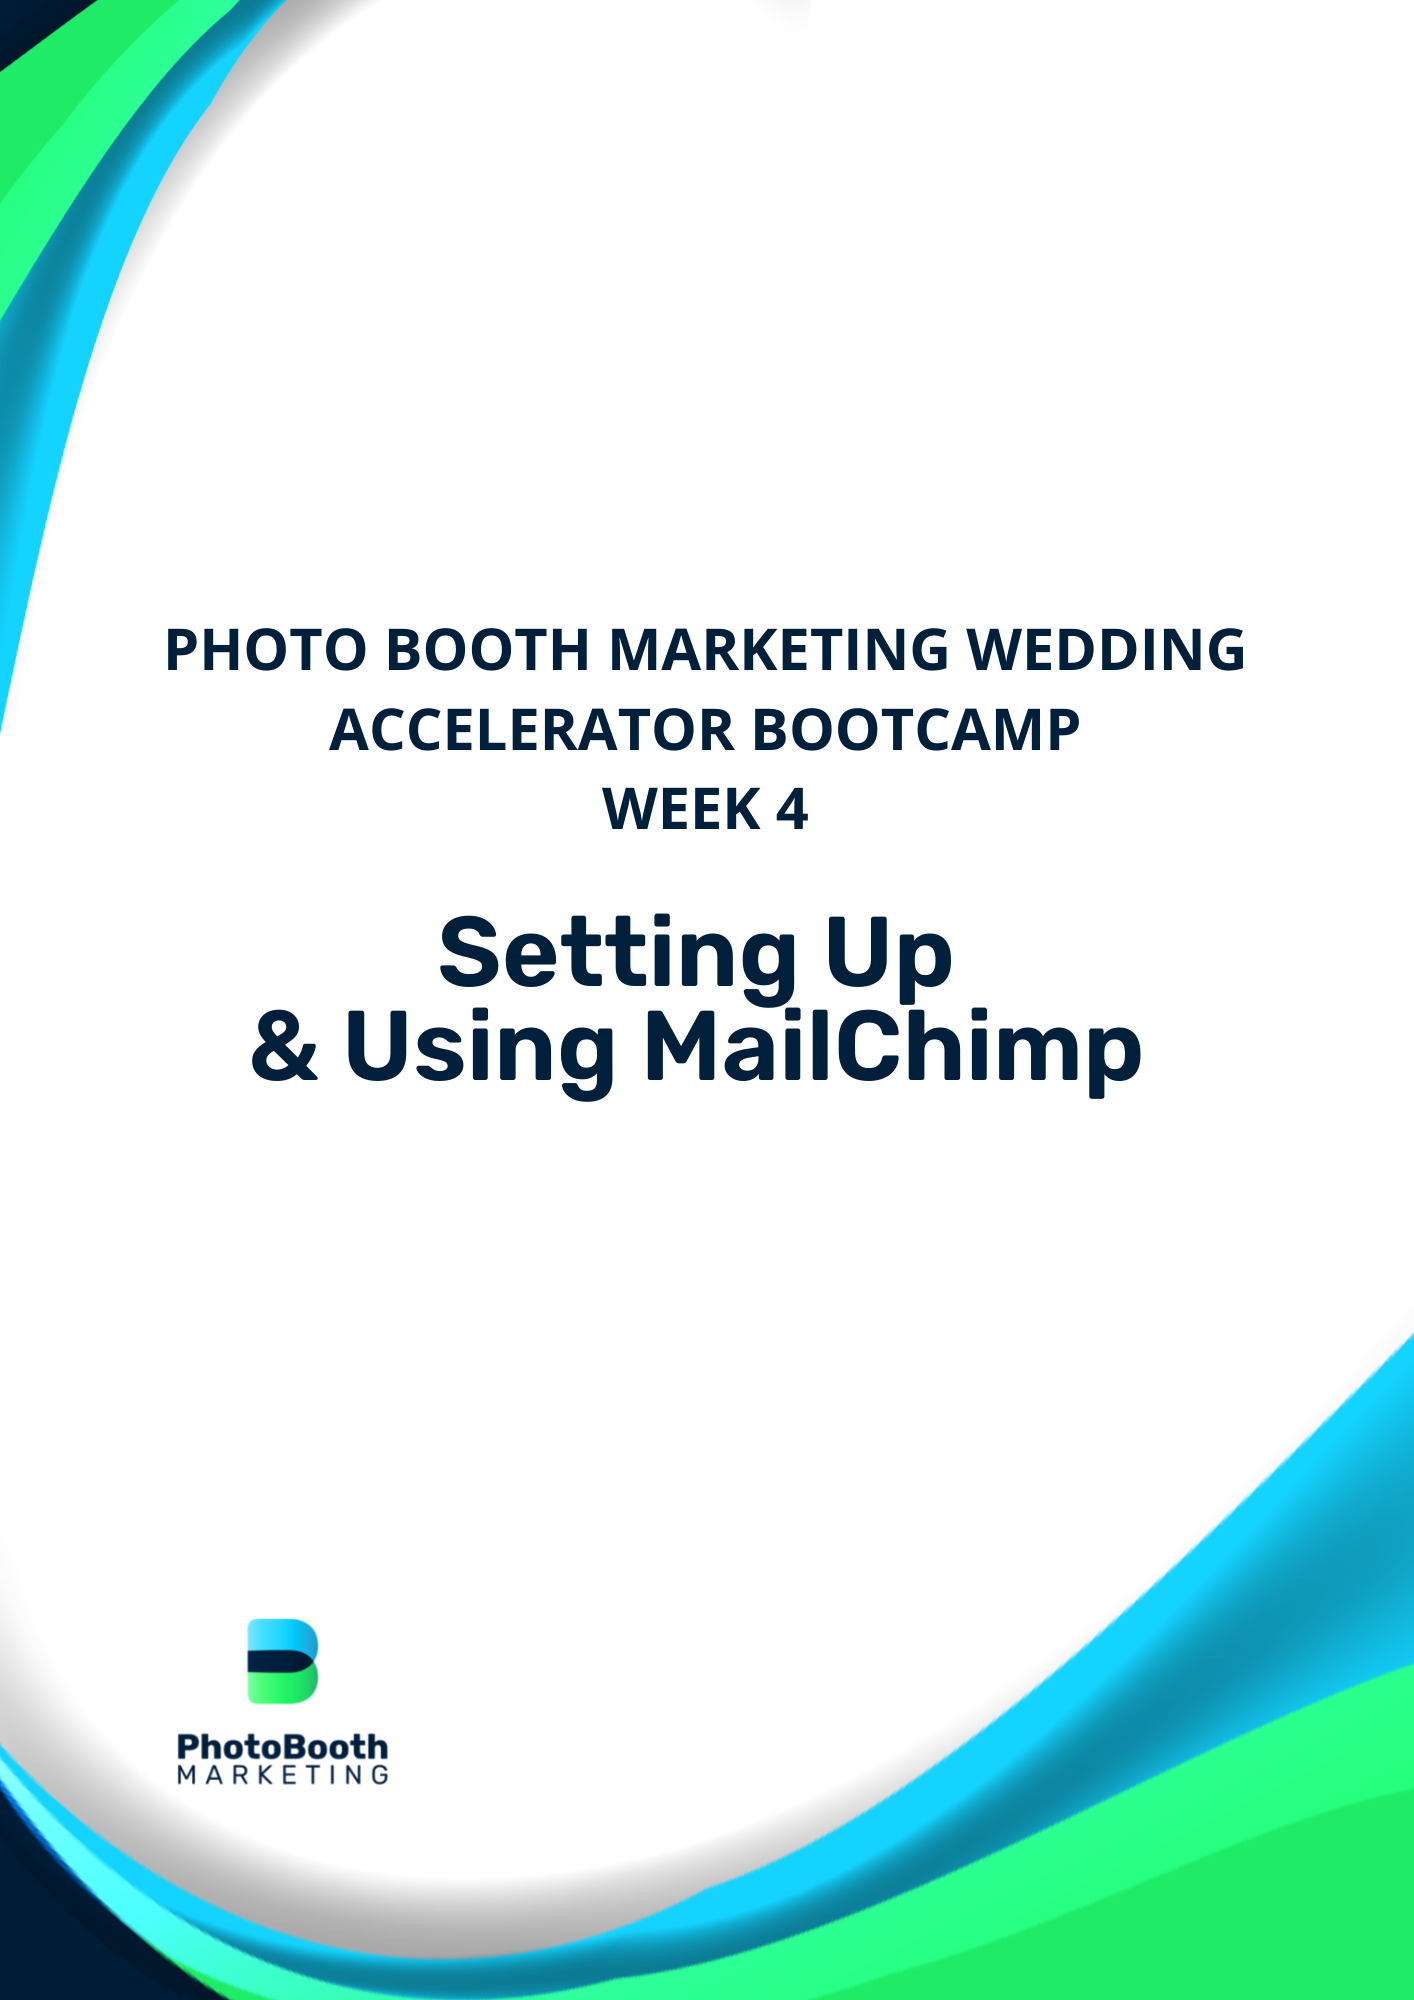 Photo Booth Marketing Wedding Bootcamp Week 5 - Using Mailchimp